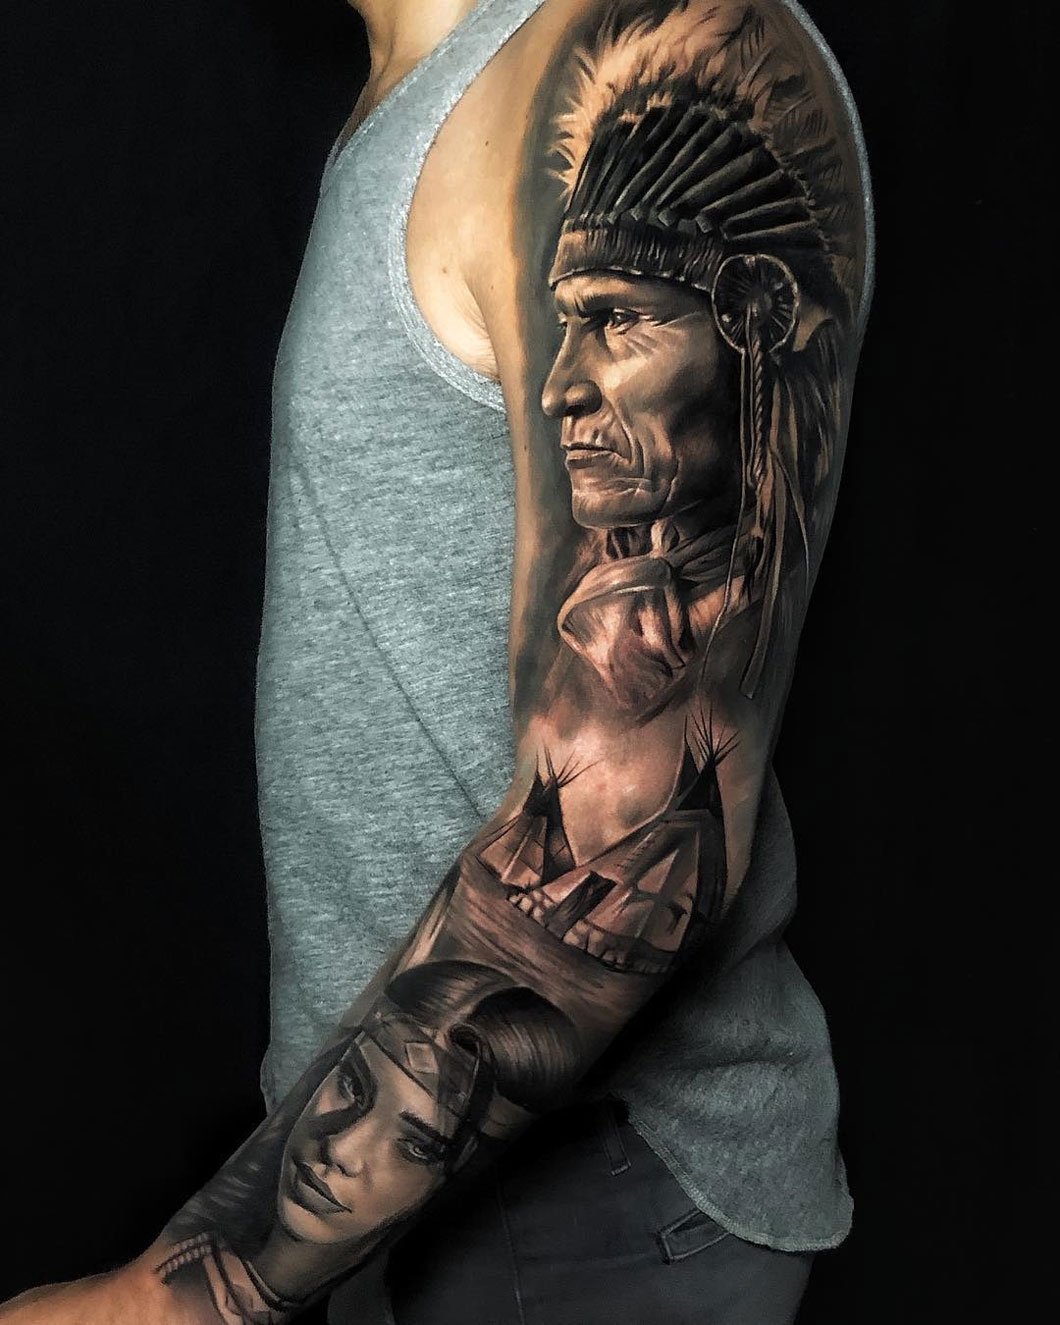 Share 181+ native american tattoos latest